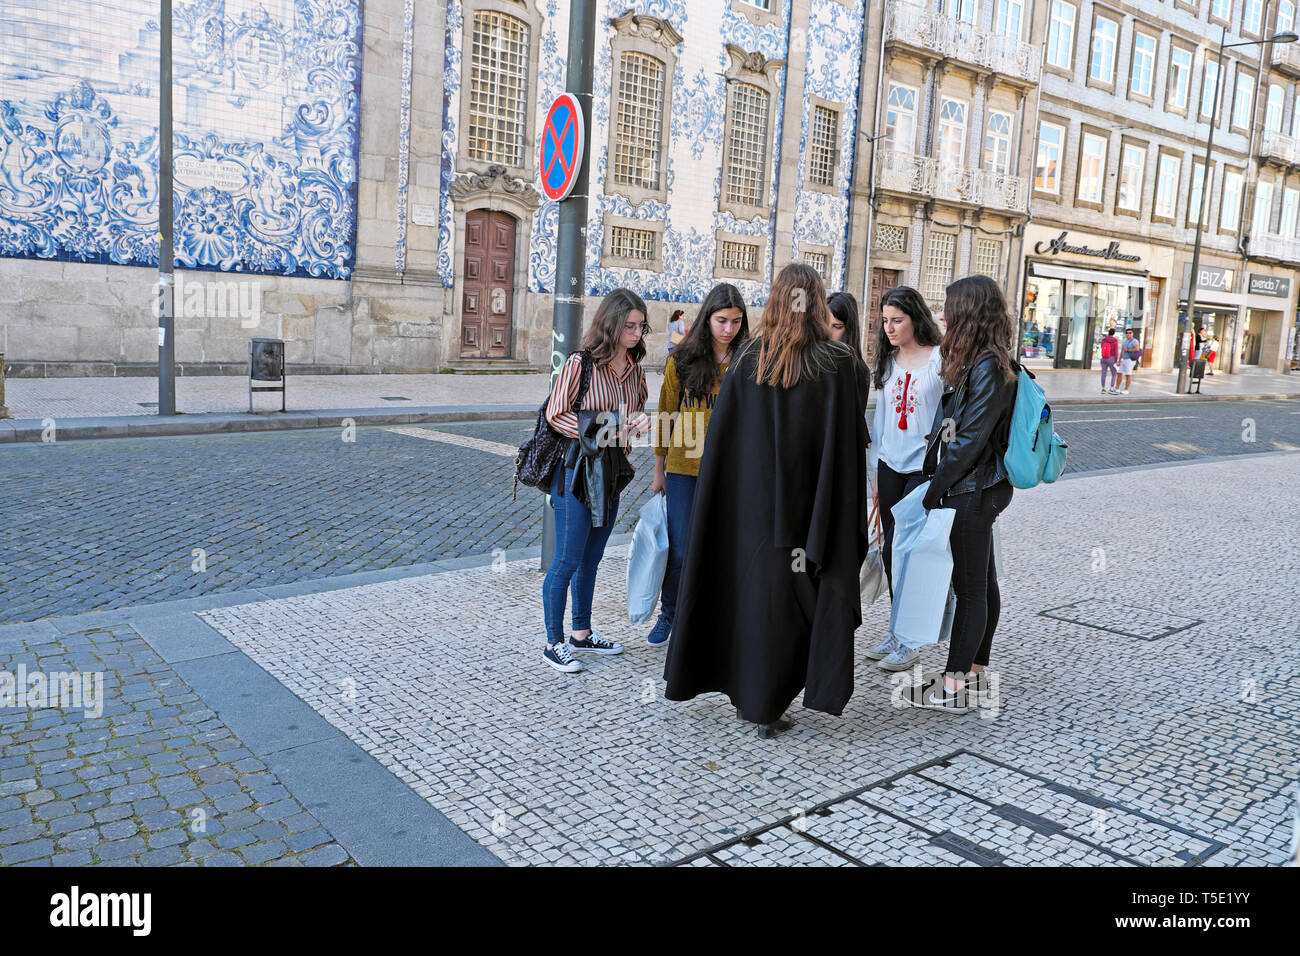 University female student in black cloak talking to friends in street Igreja do Carmo near Praça de Carlos Alberto Porto Portugal Europe KATHY DEWITT Stock Photo